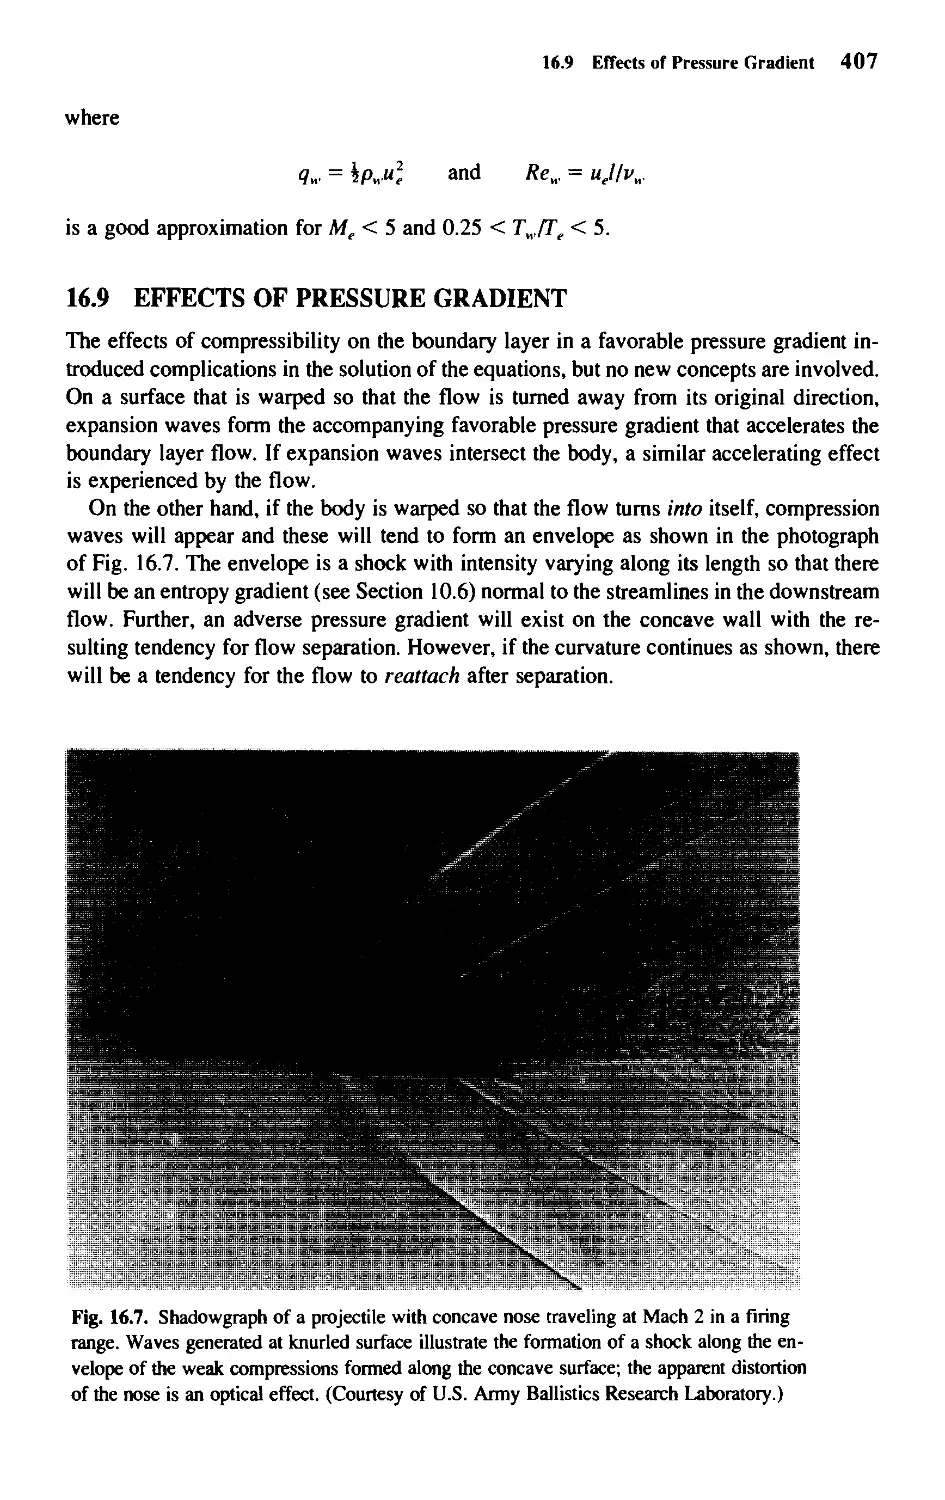 16.9 - Effects of Pressure Gradient